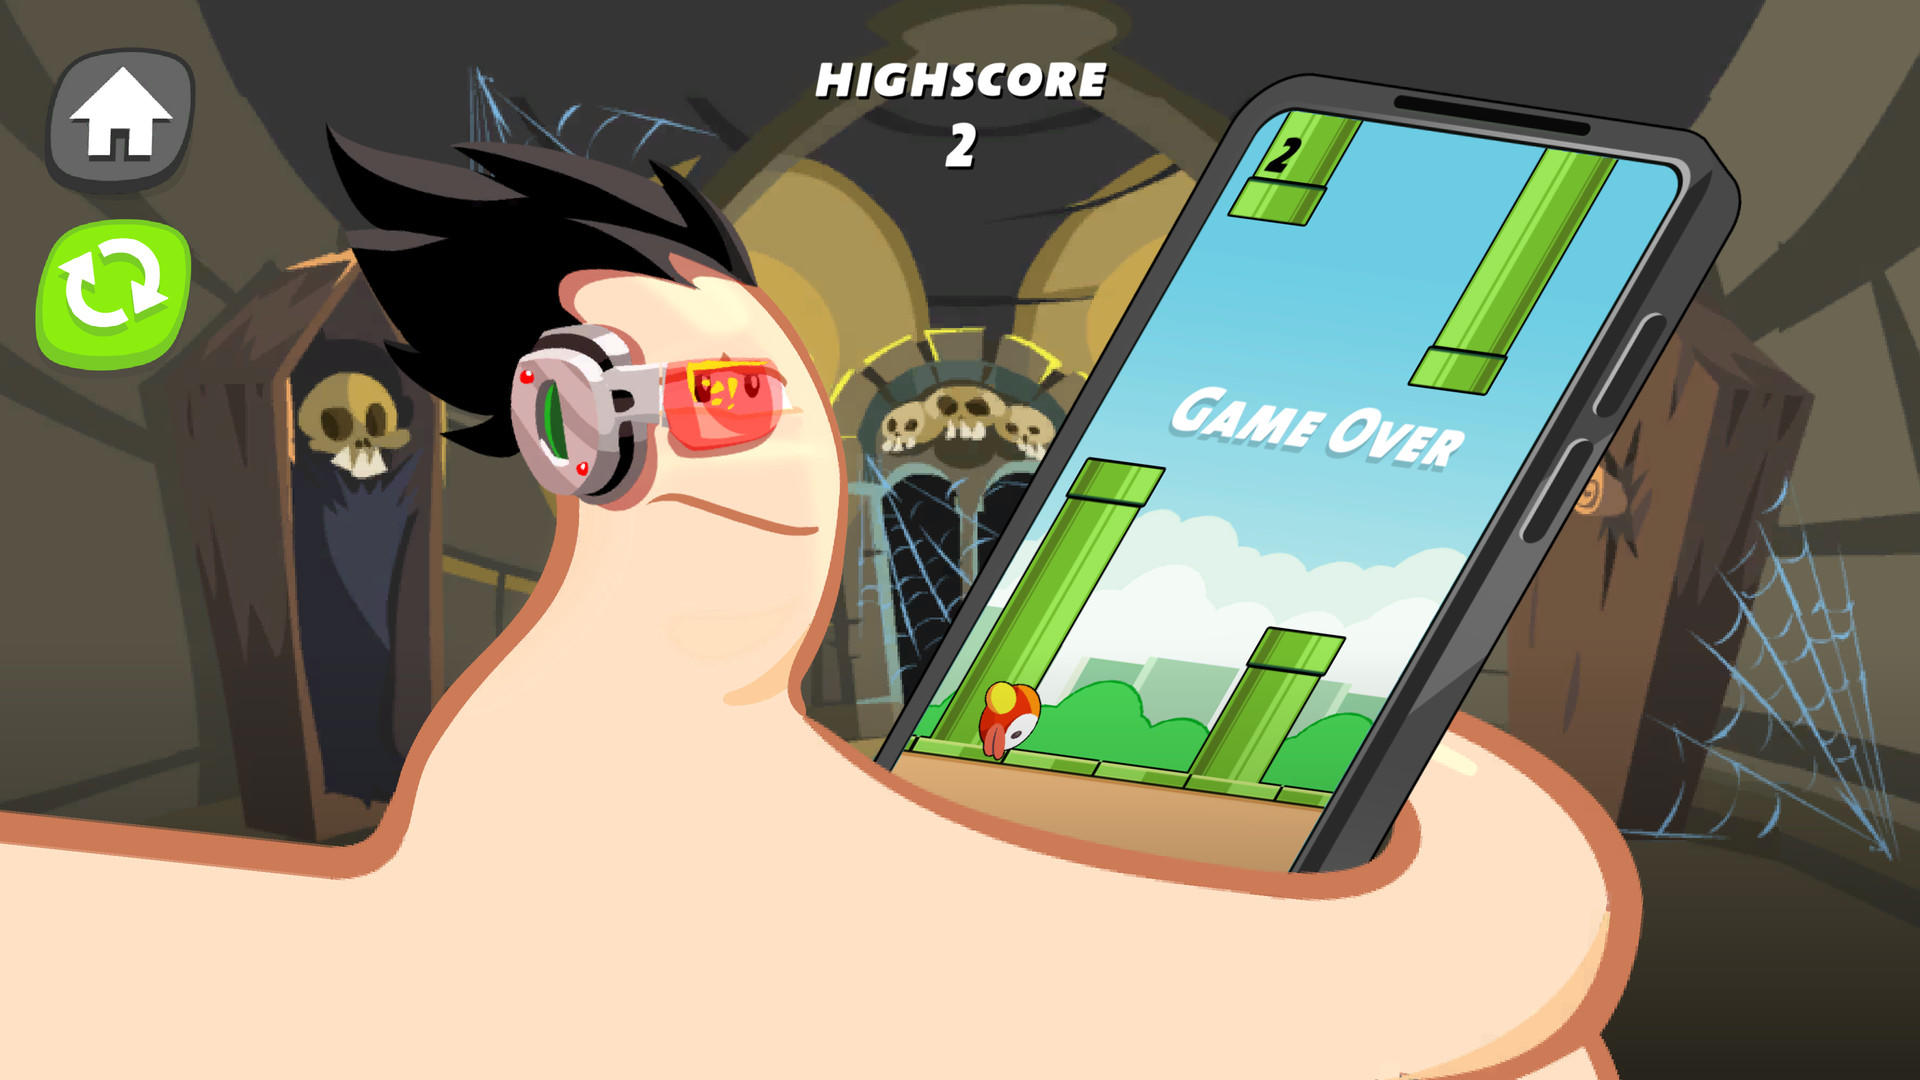 Thumb Fighter screenshot game